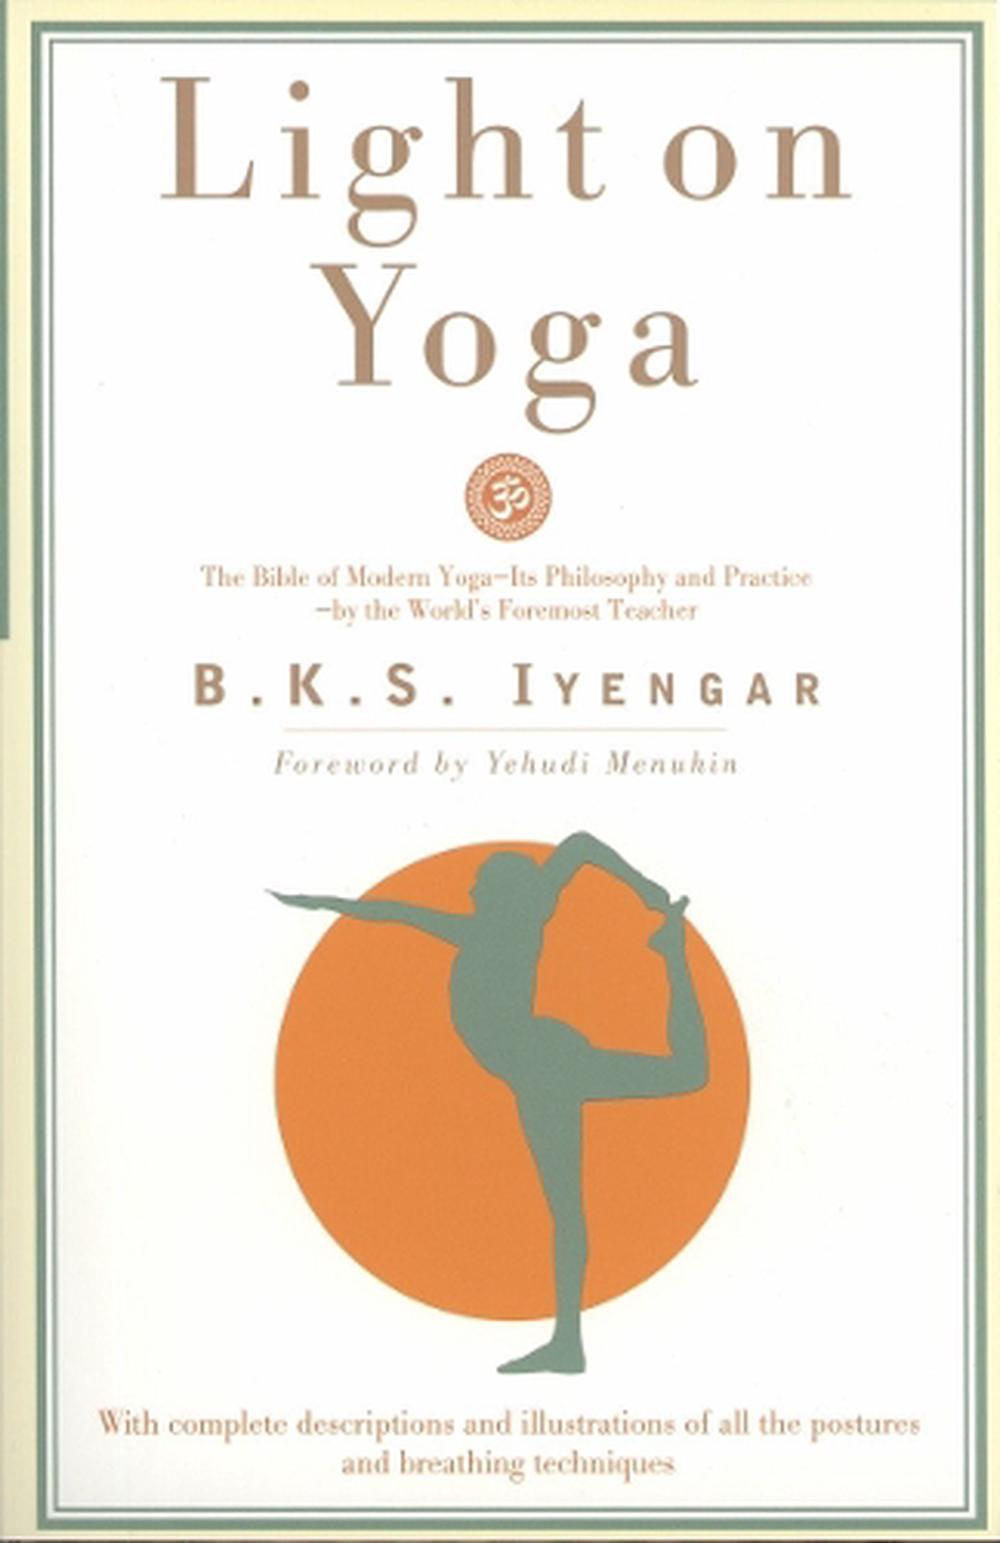 Light on Yoga Yoga Dipika by B.K.S. Iyengar (English) Paperback Book